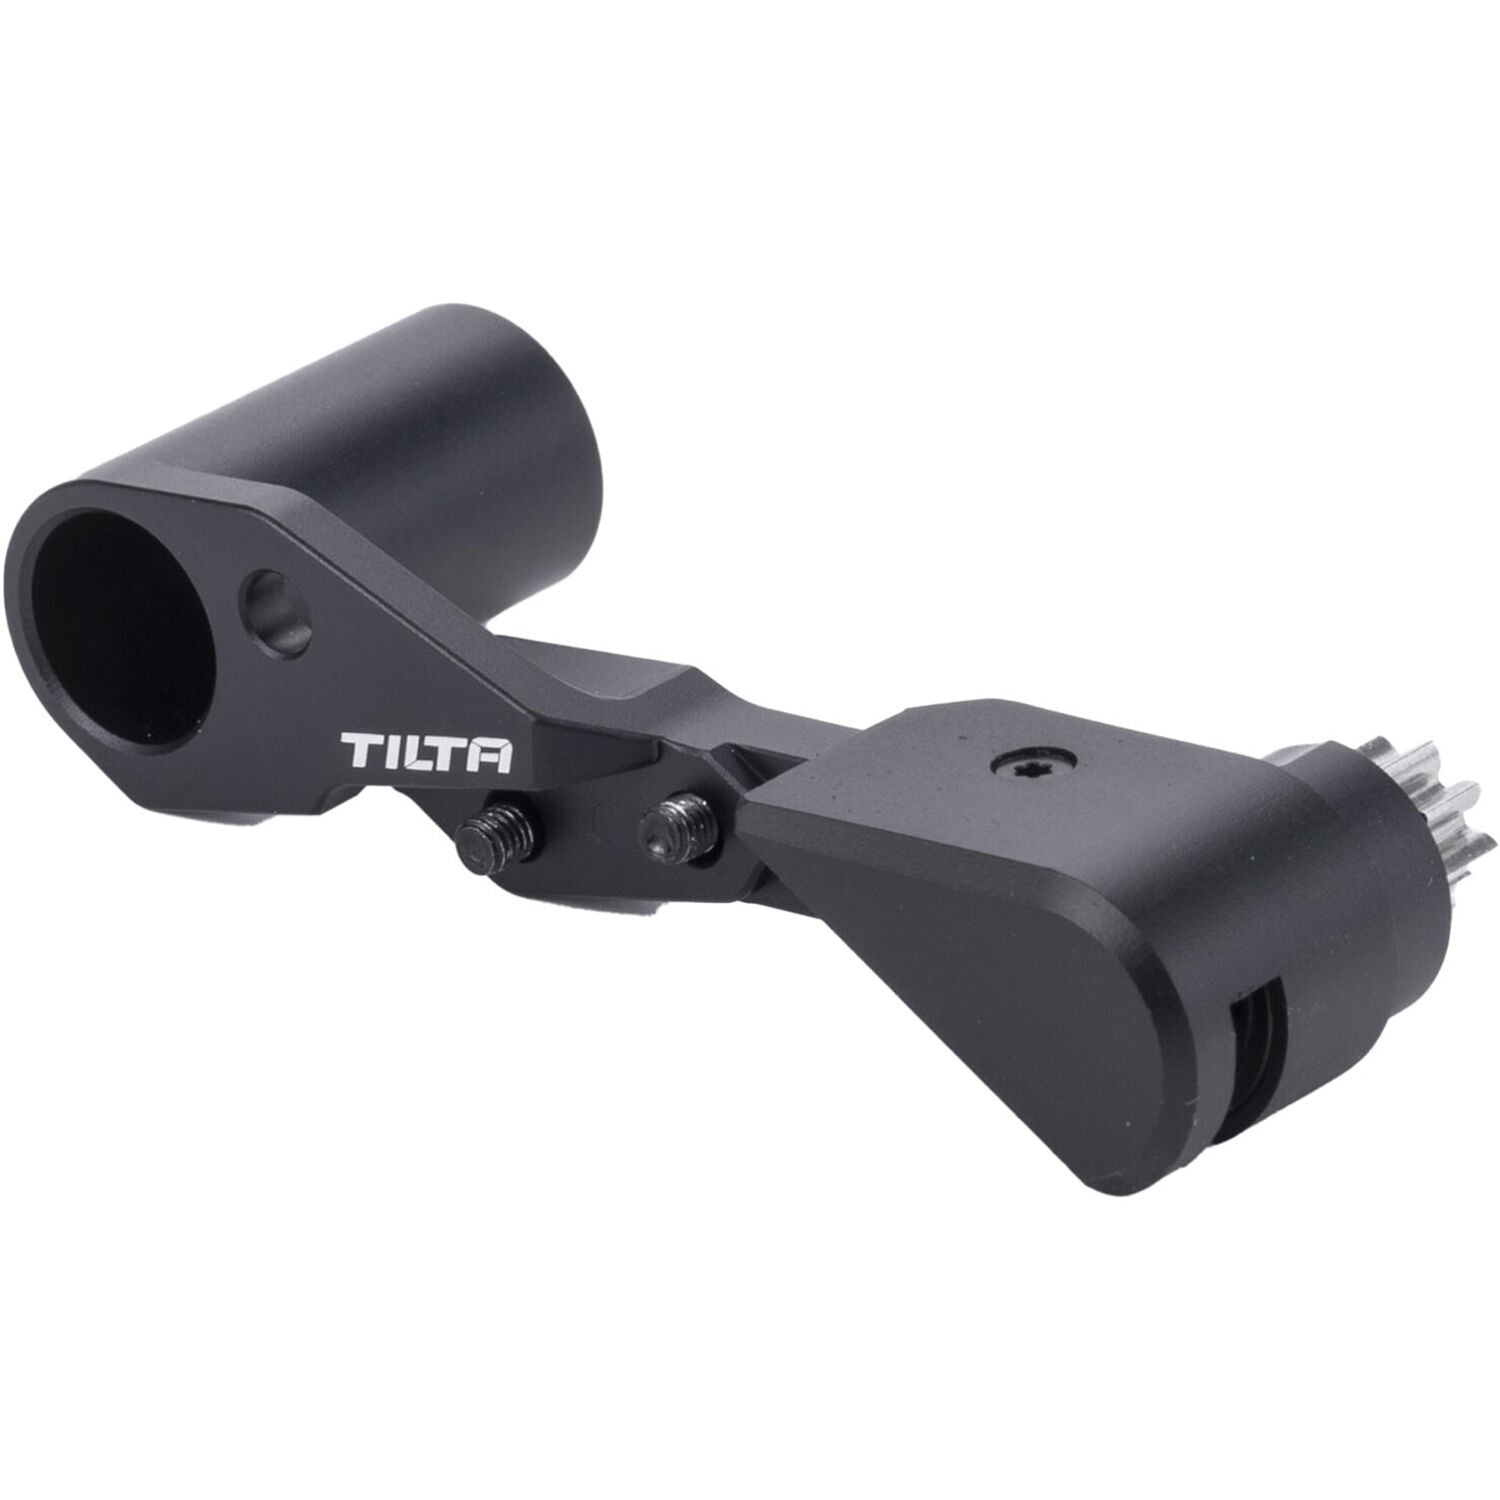 Tilta Nucleus Nano Motor Adapter for Tilta Mirage (Single 15mm Rod)